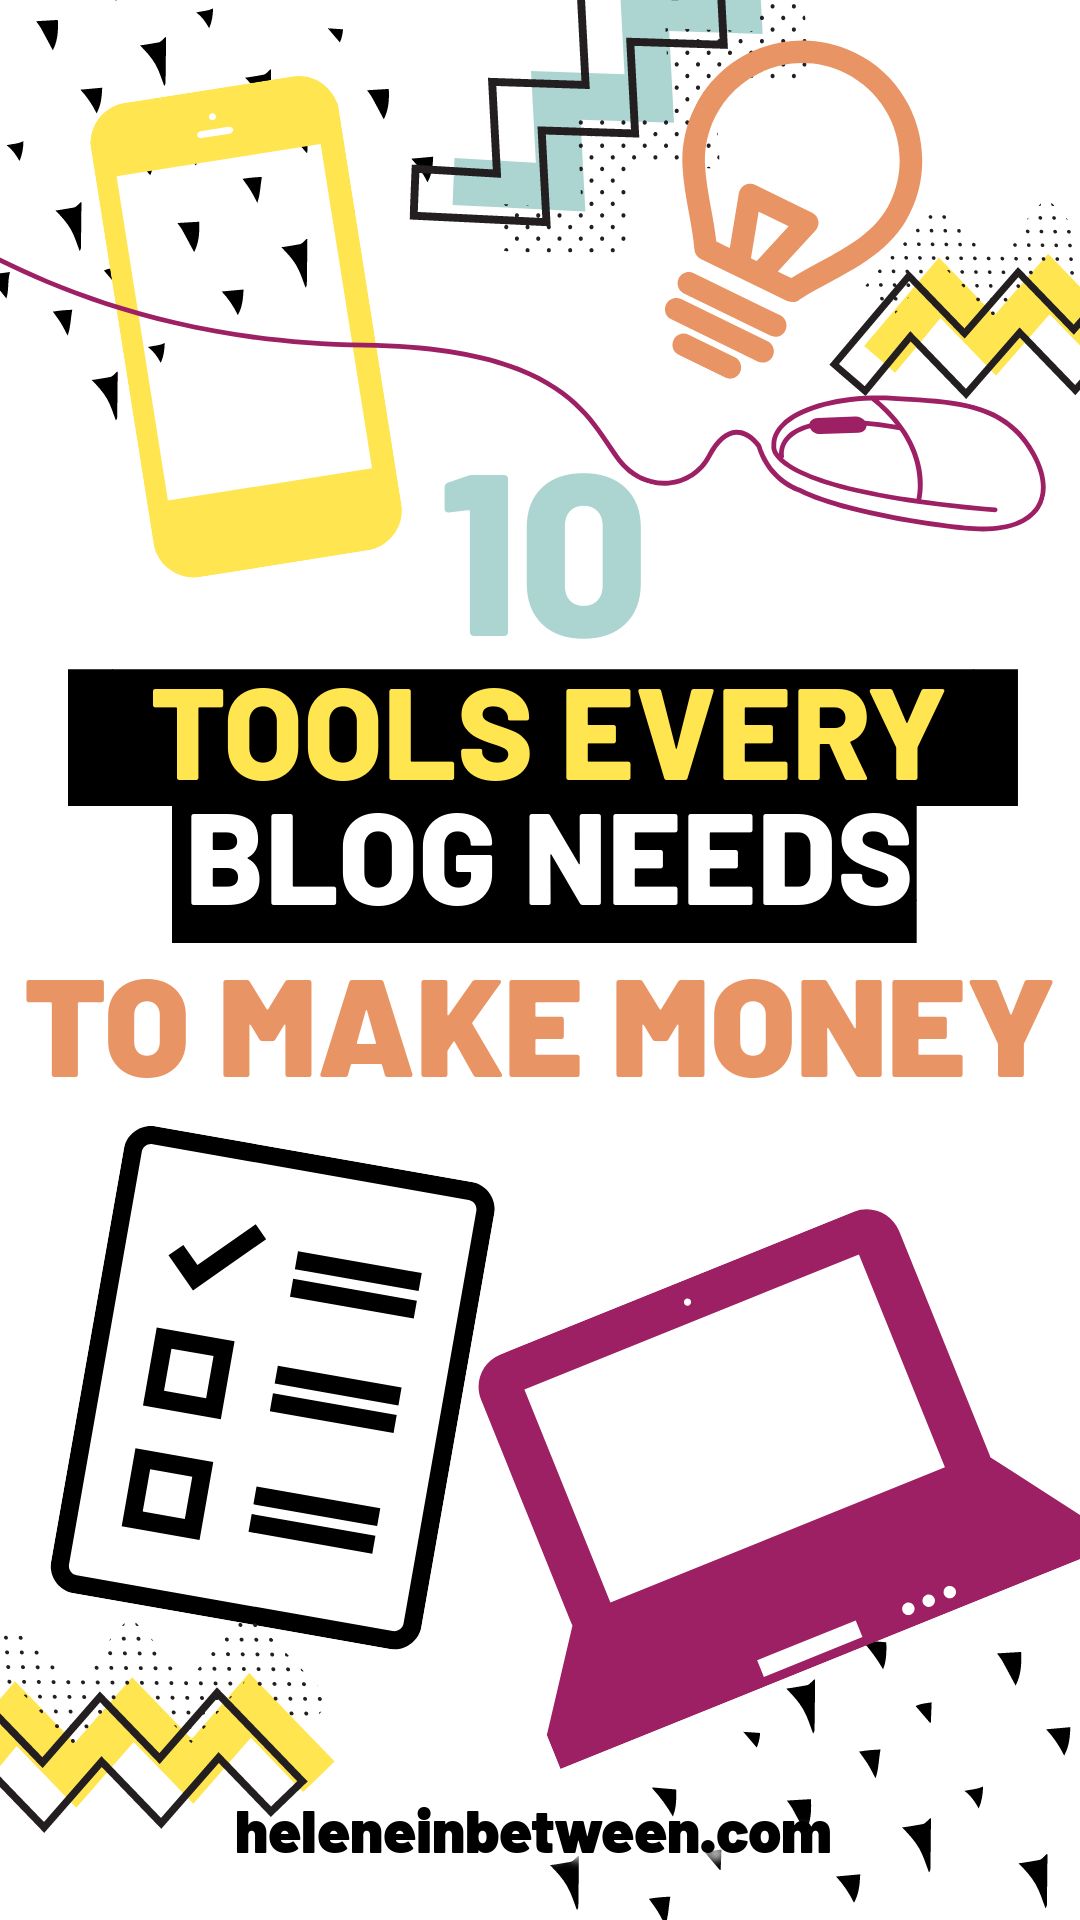 How To Make Money Blogging On WordPress